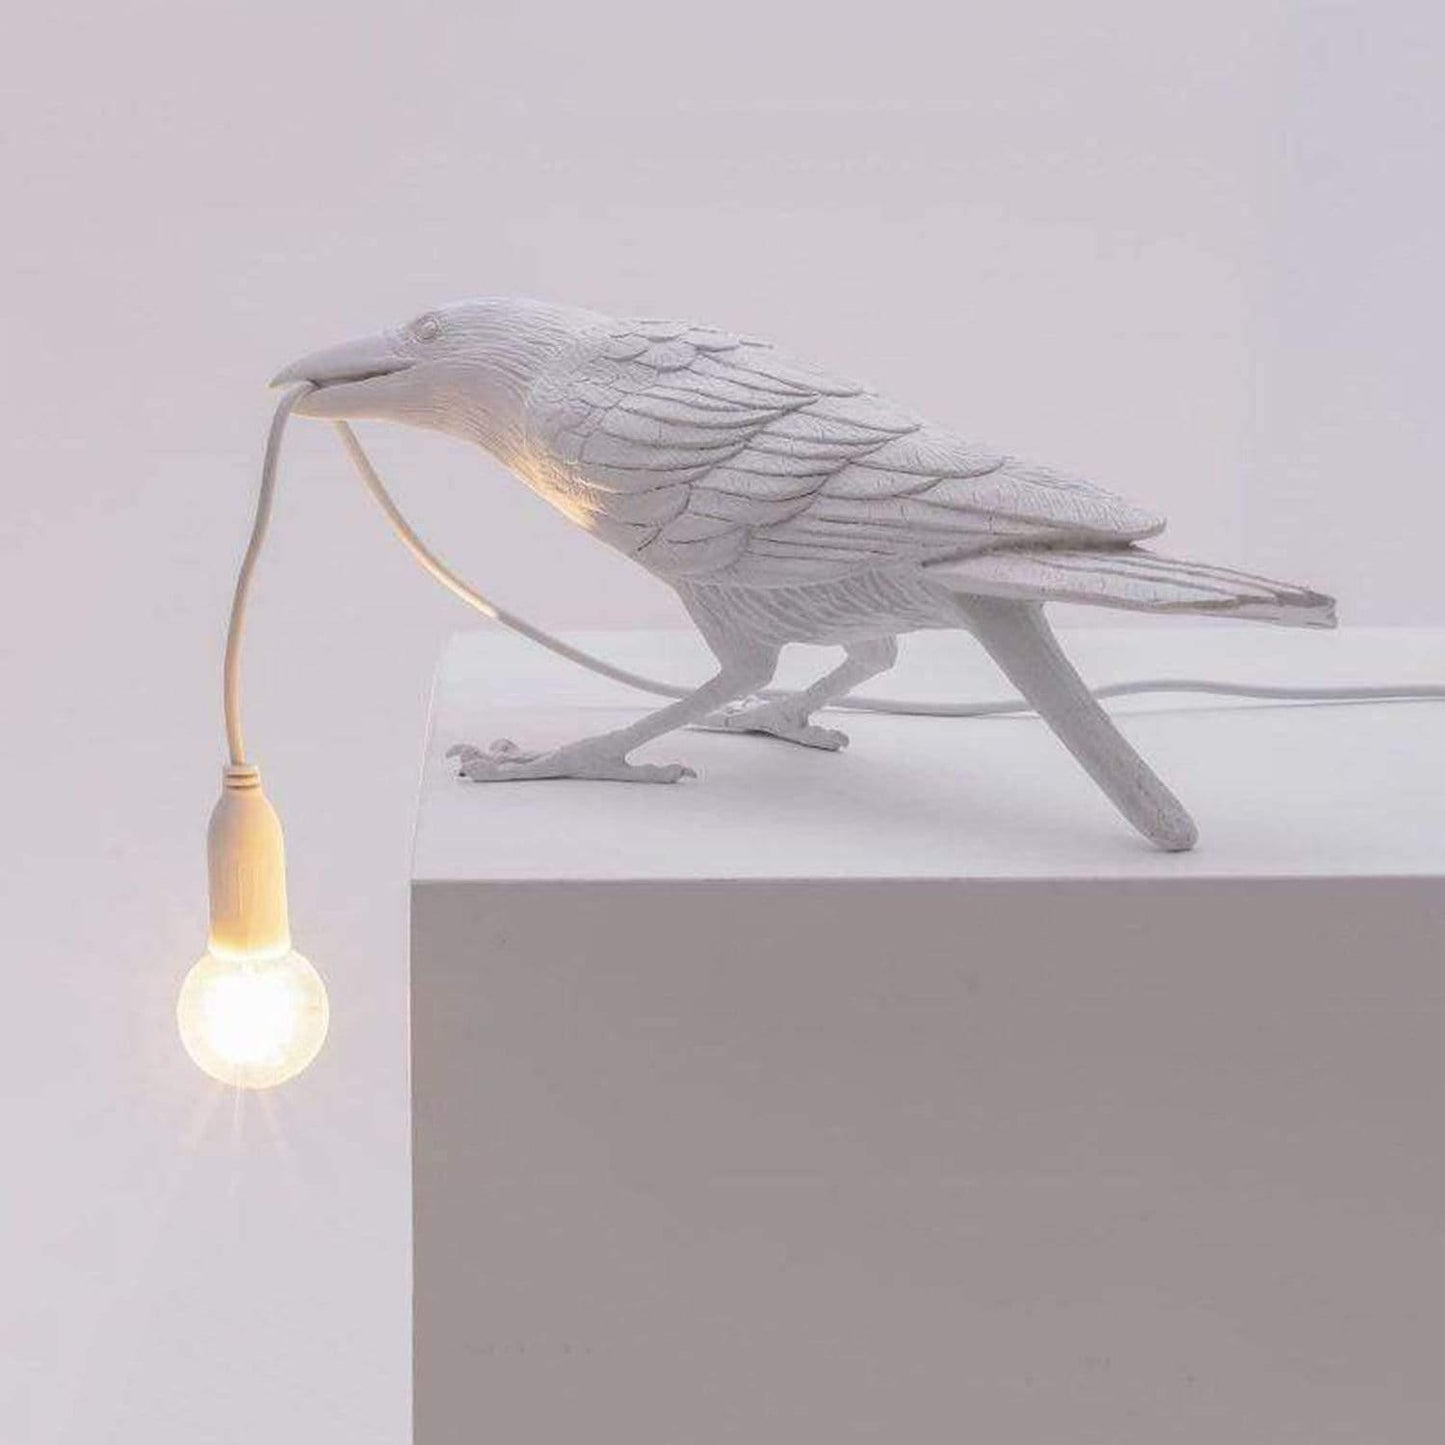 The Raven Bird Lamp